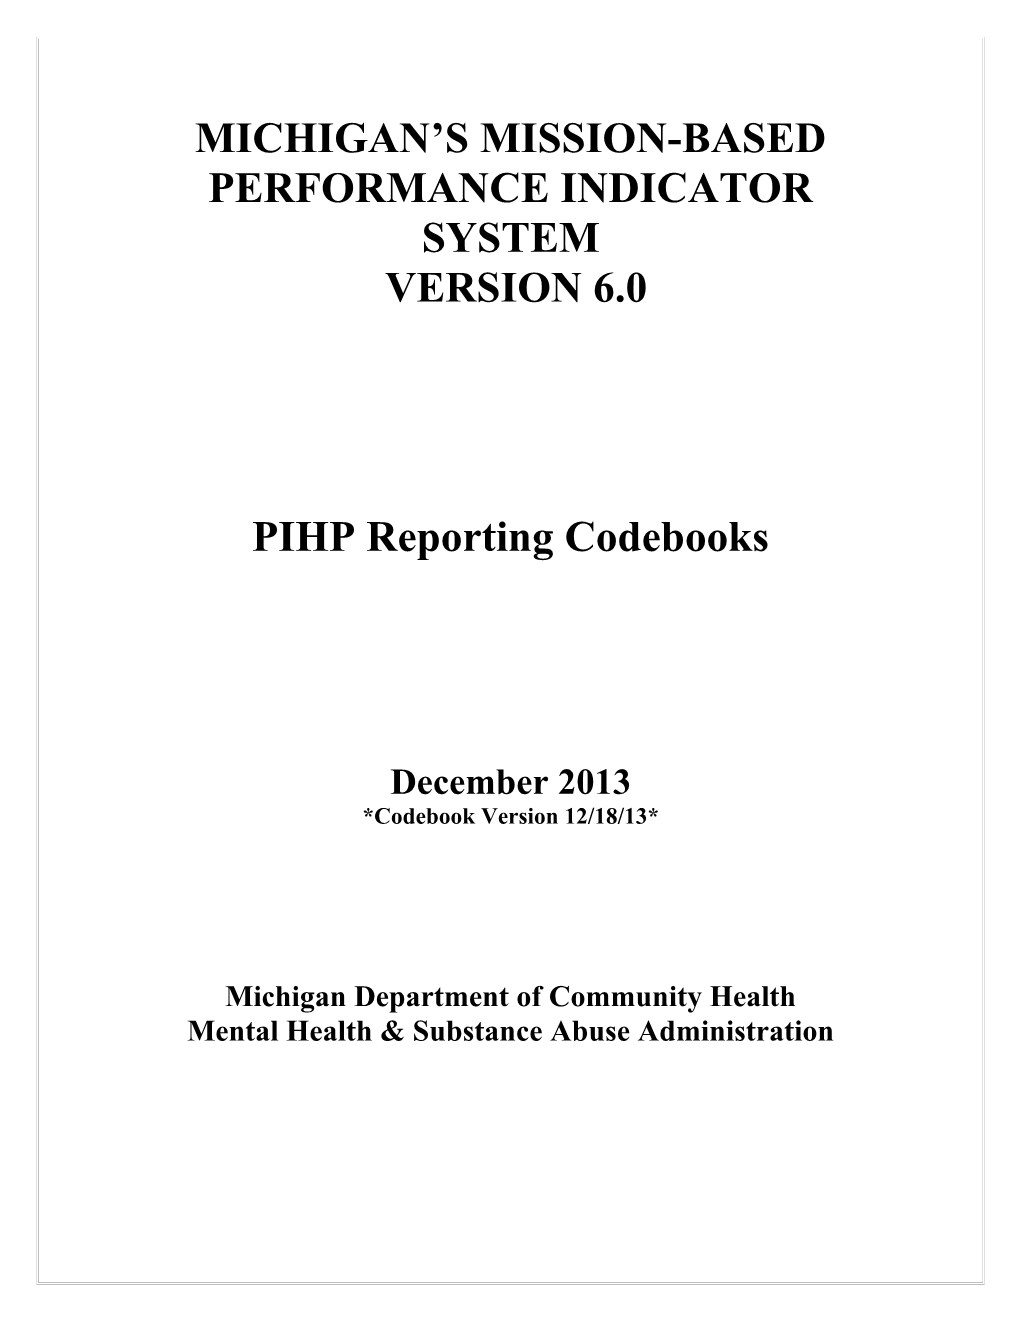 Michigan Mission-Based Performance Indicator System, Version 6